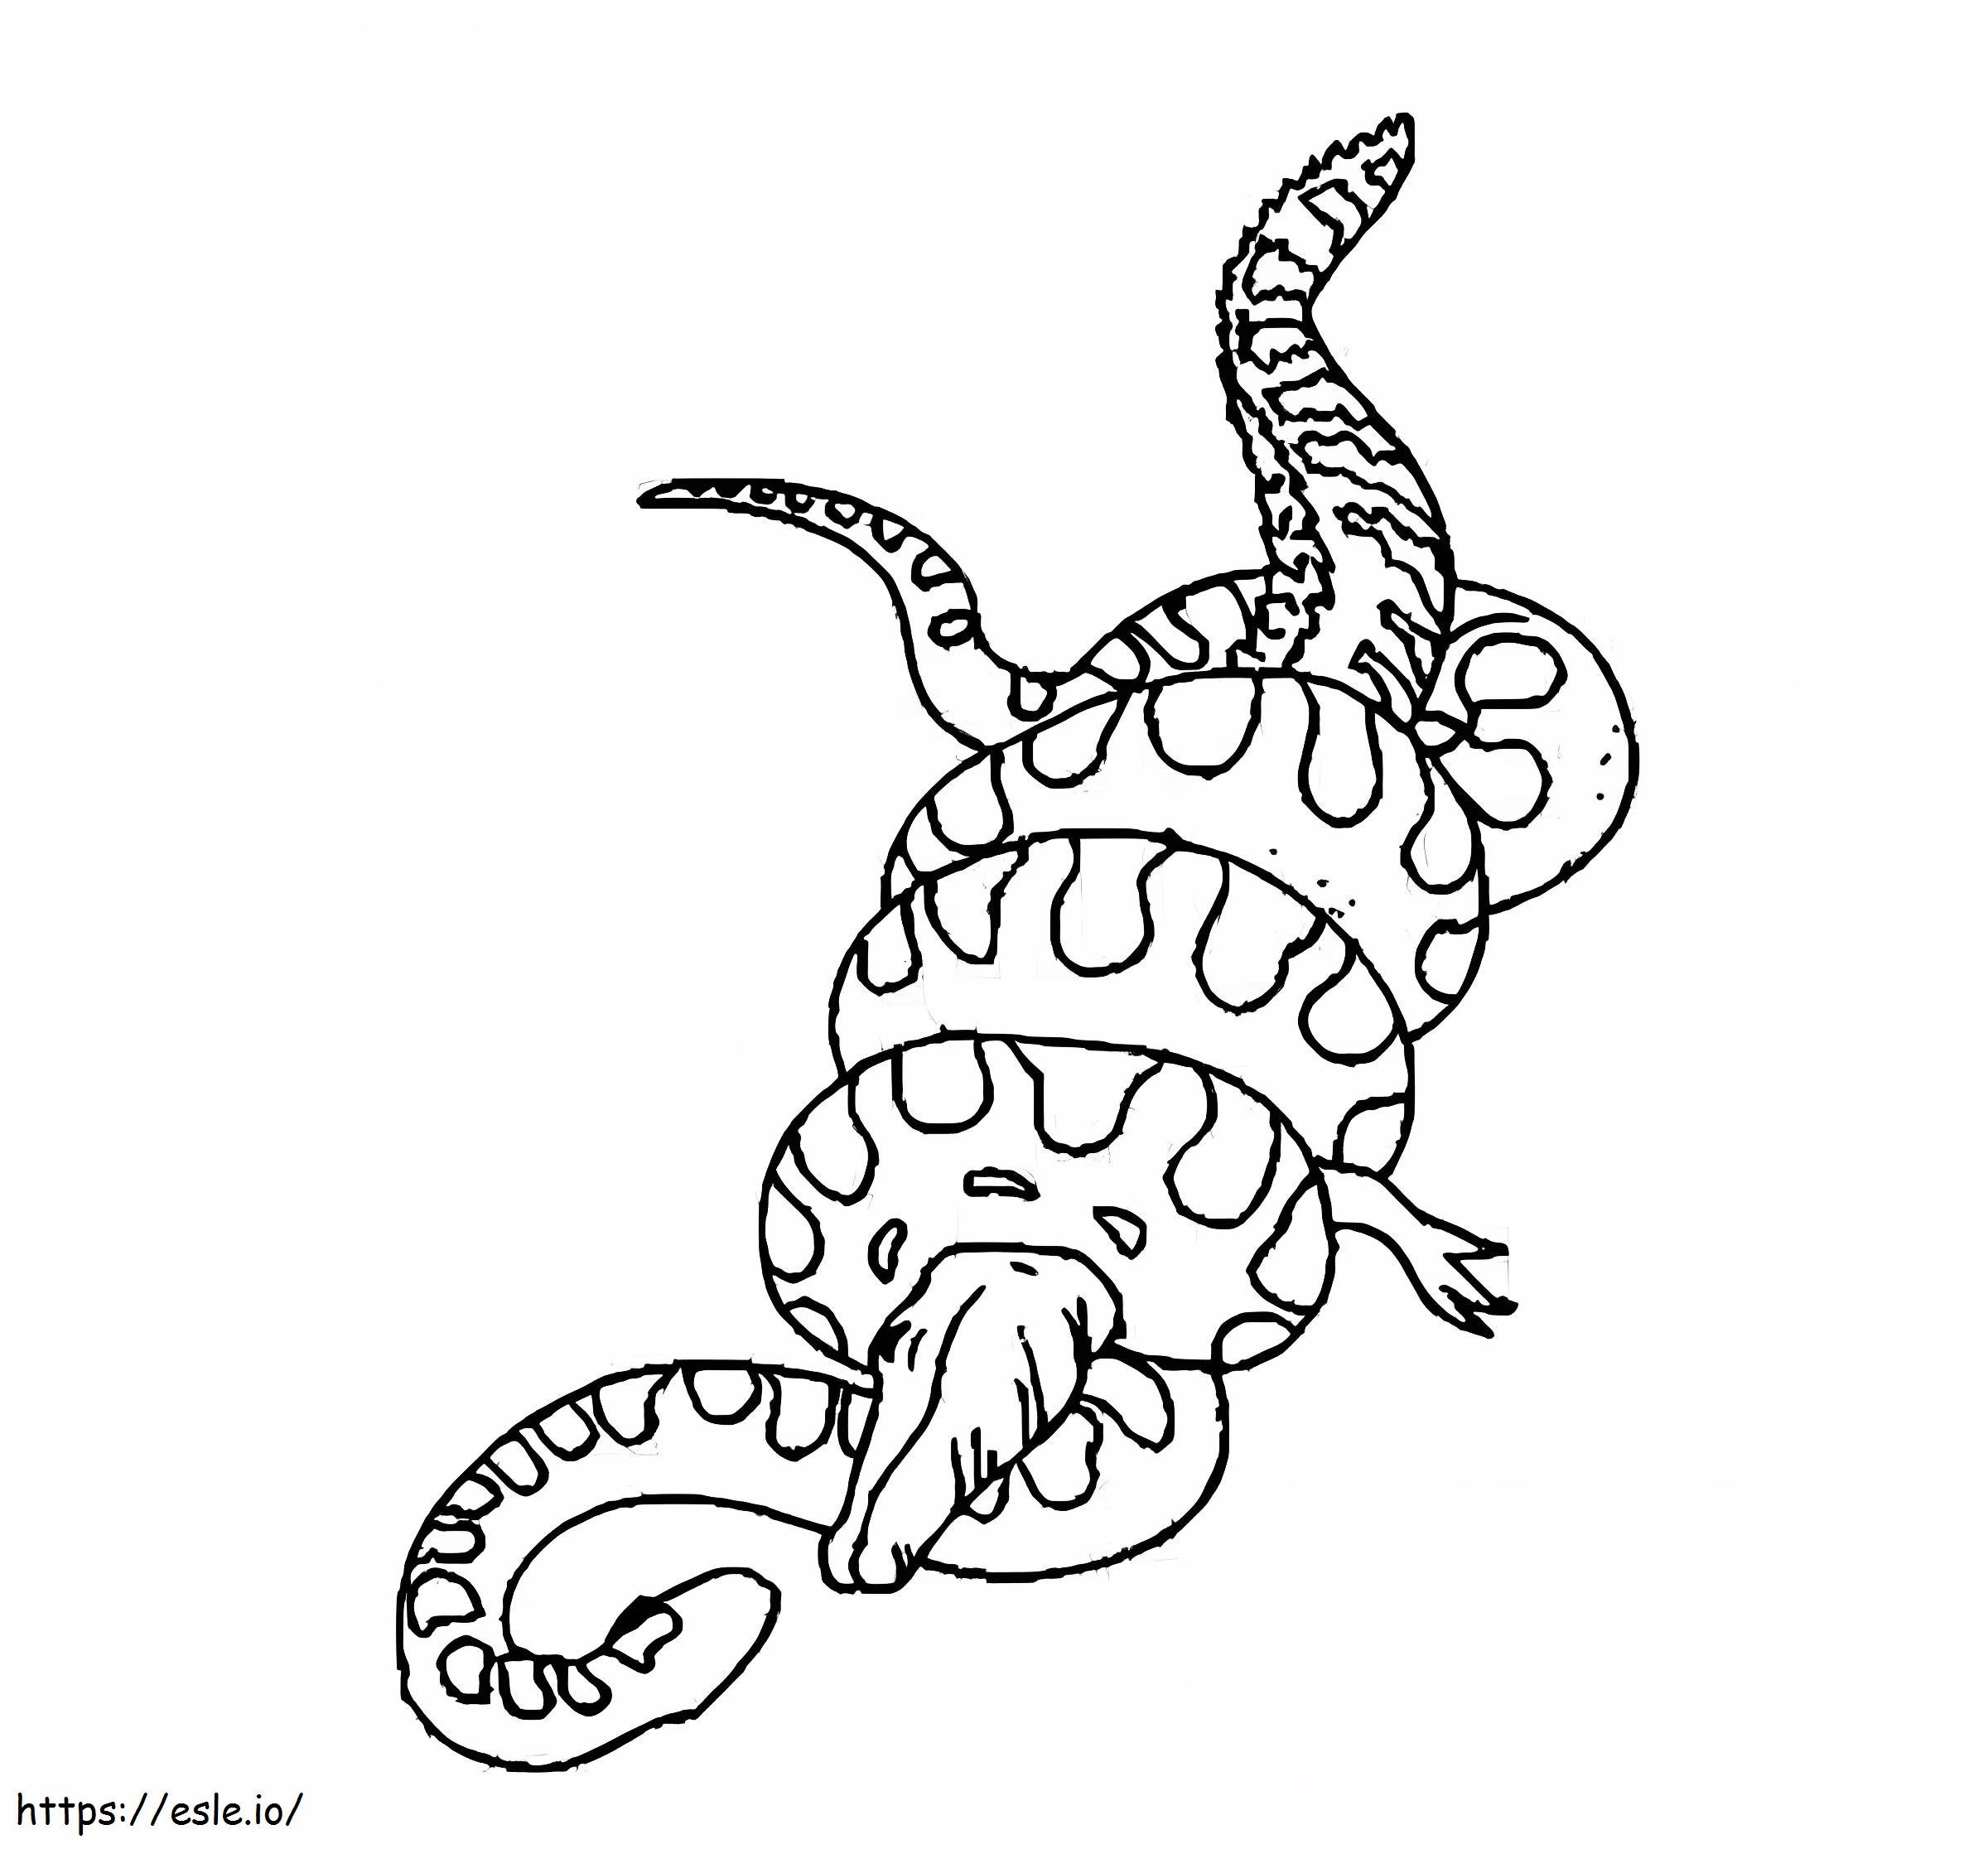 Python Vs. Crocodile coloring page